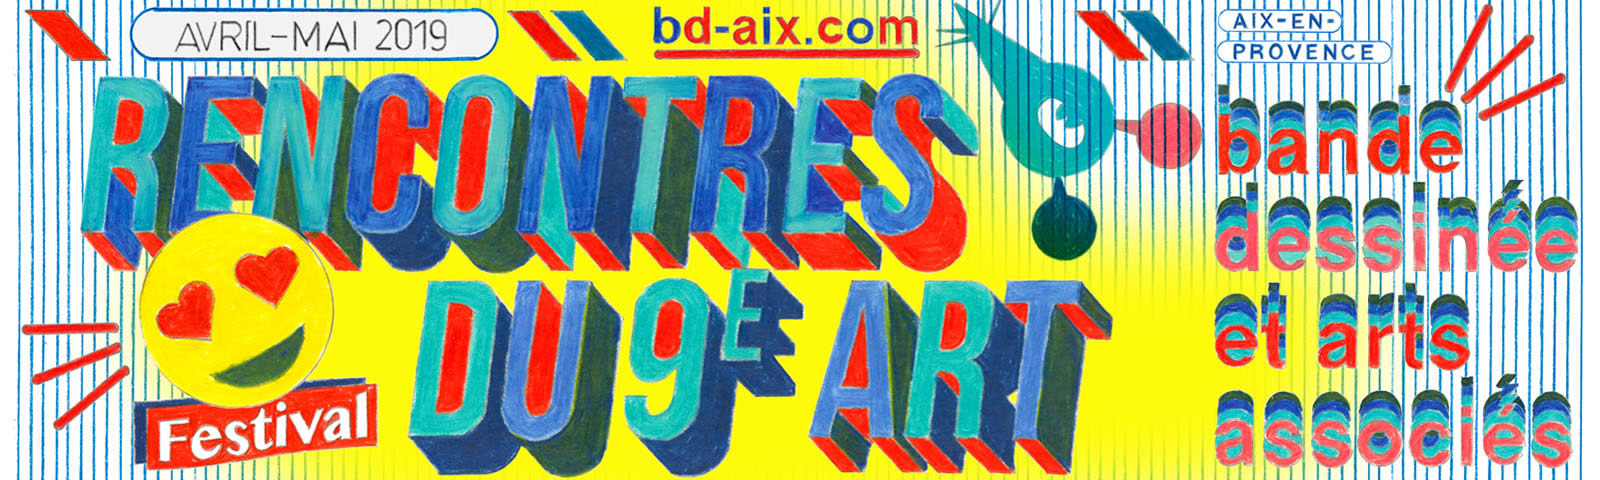 ANDY WARHOL BY TYPEX - Festival Bande Dessinée & Arts associés -  Aix-en-Provence